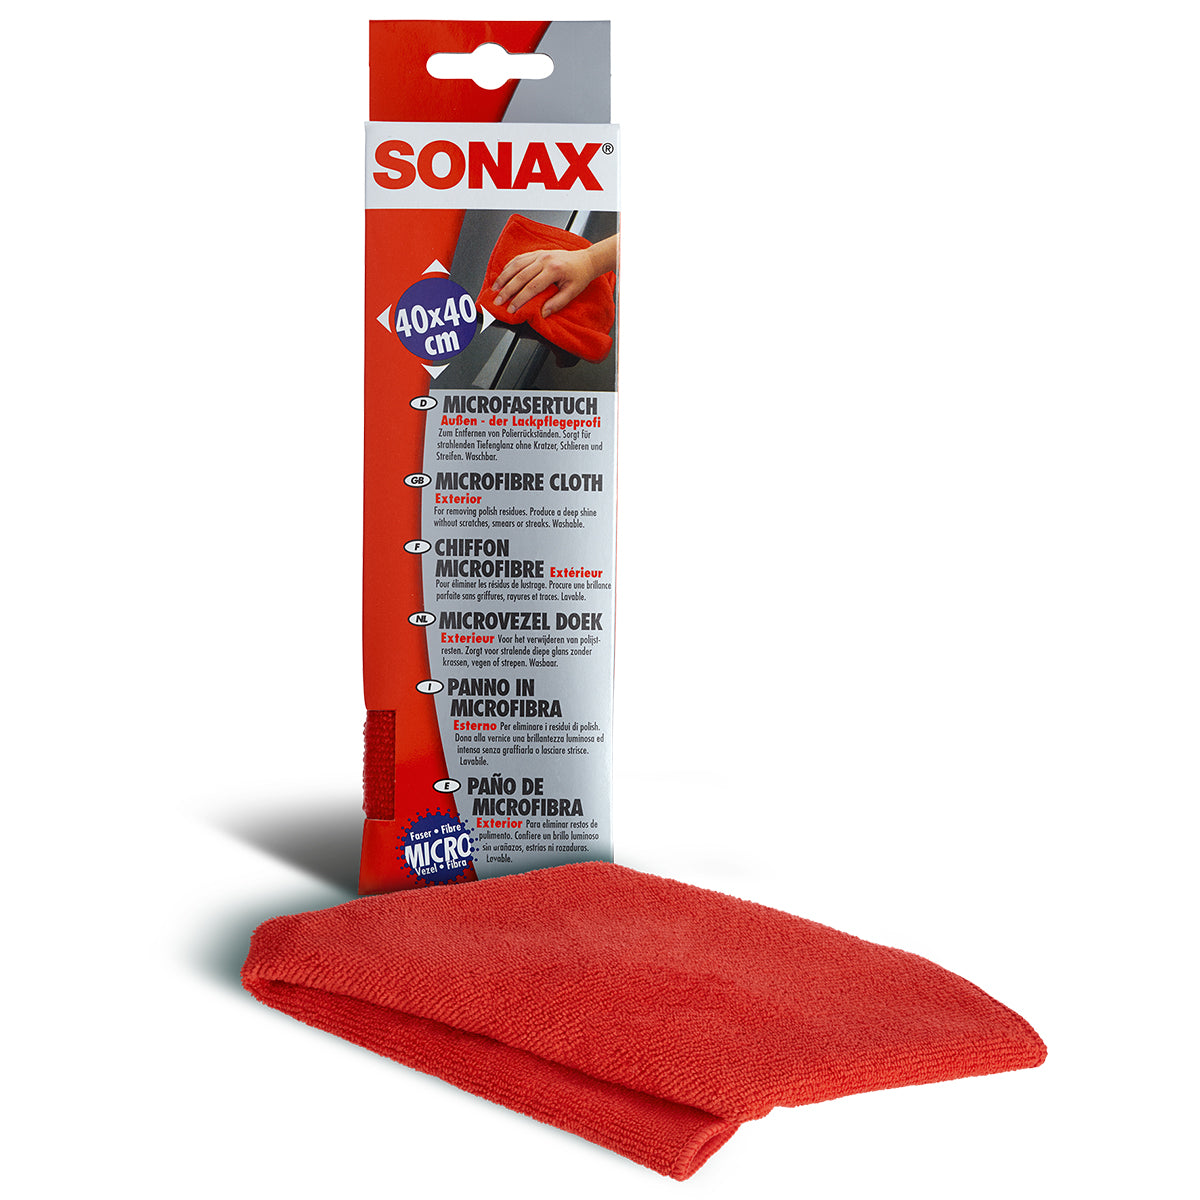 SONAX Microfibre Cloth for Exterior